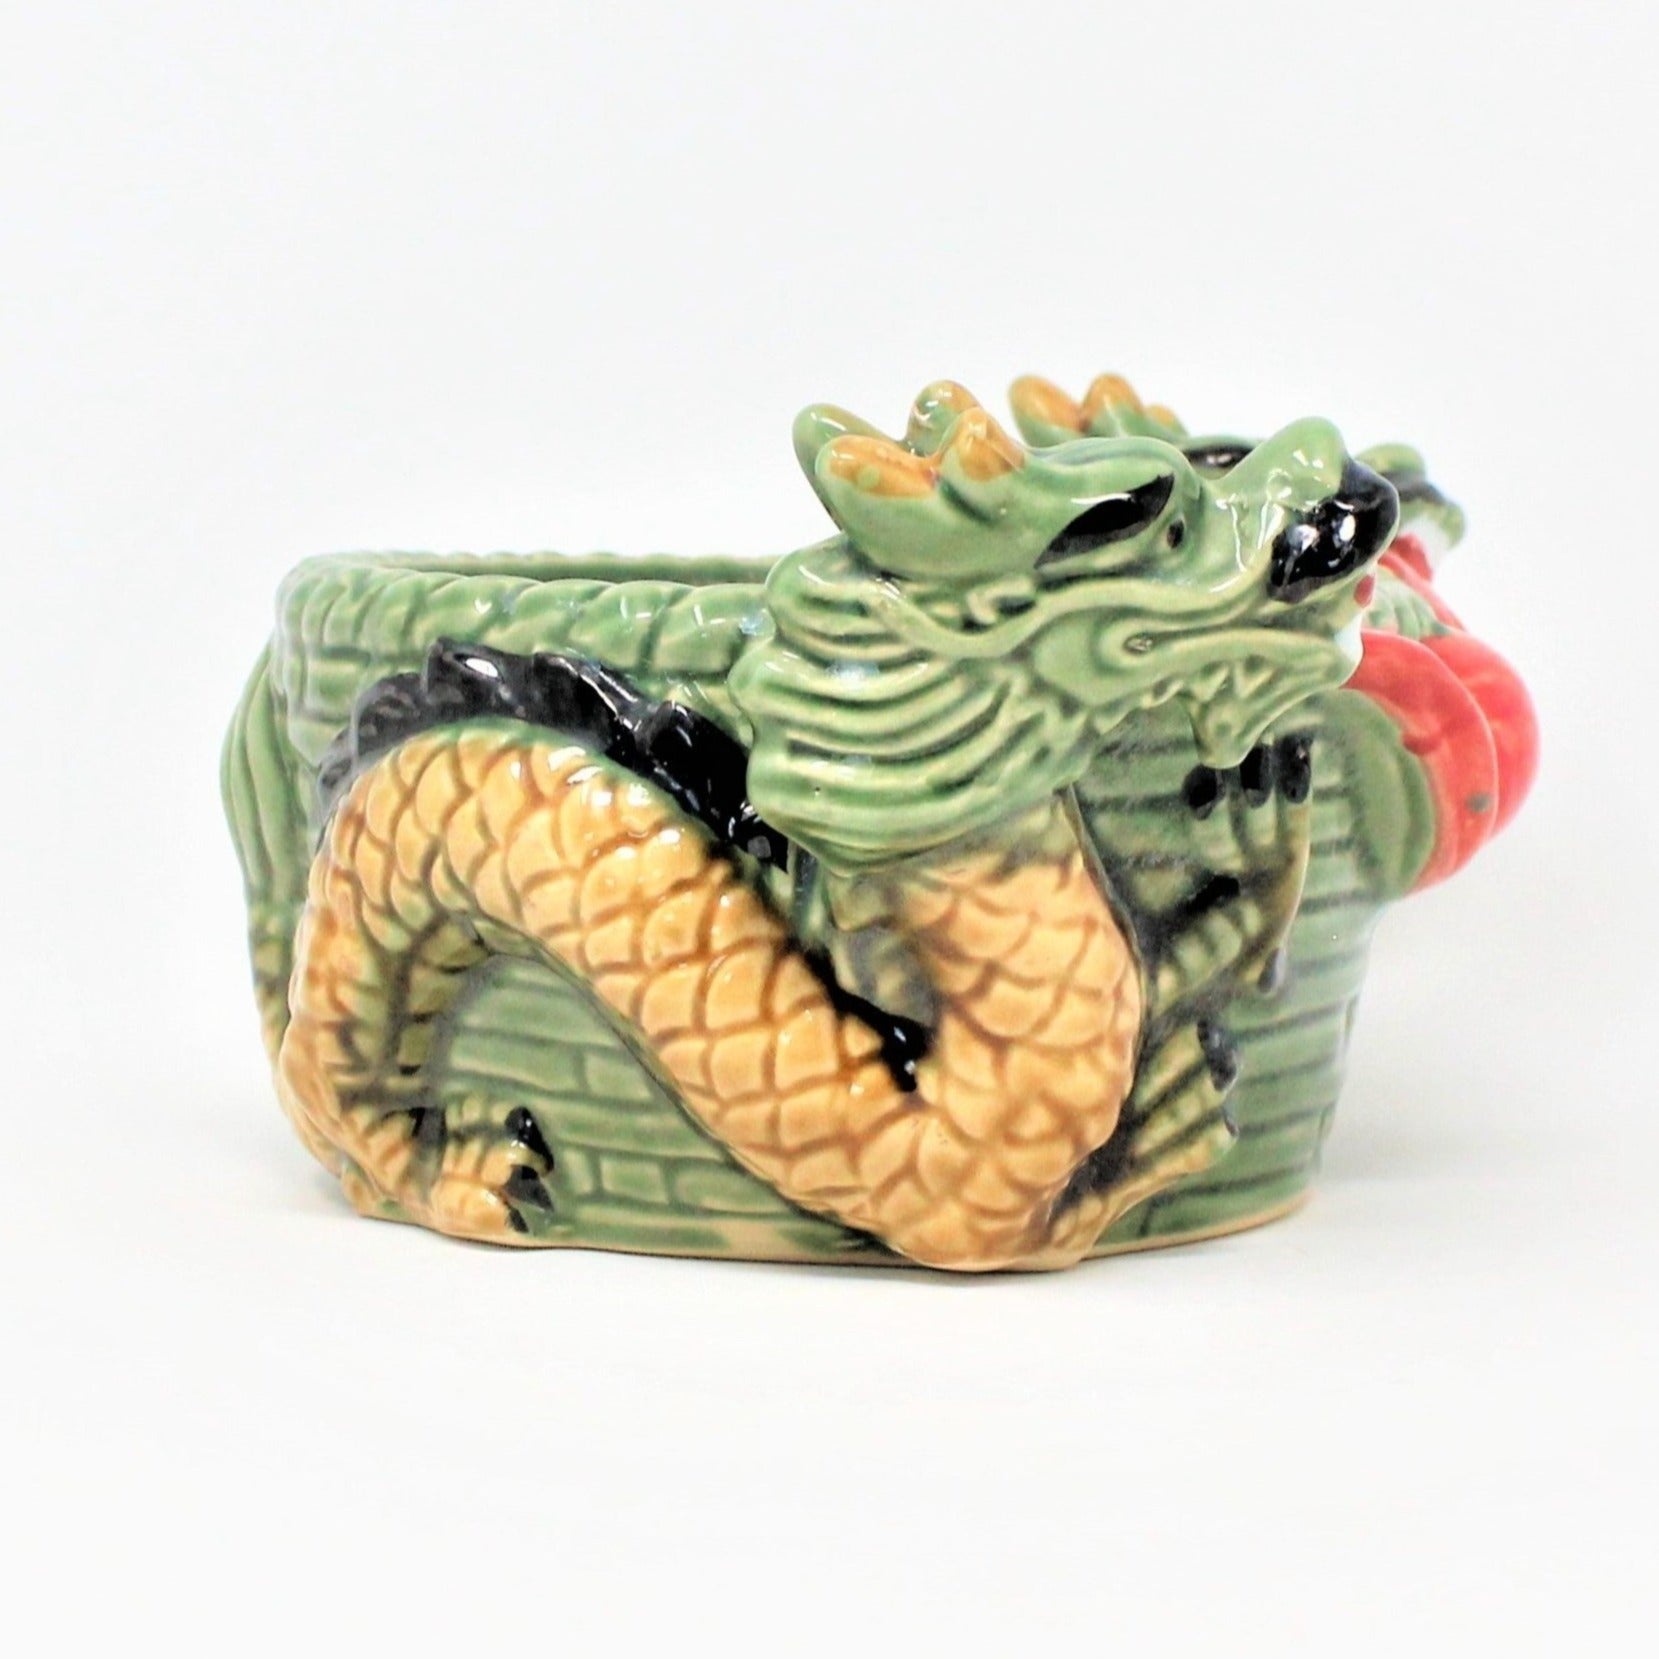 Chinese Dragon Vase - Handmade Decorative Oriental Sculptural Vase